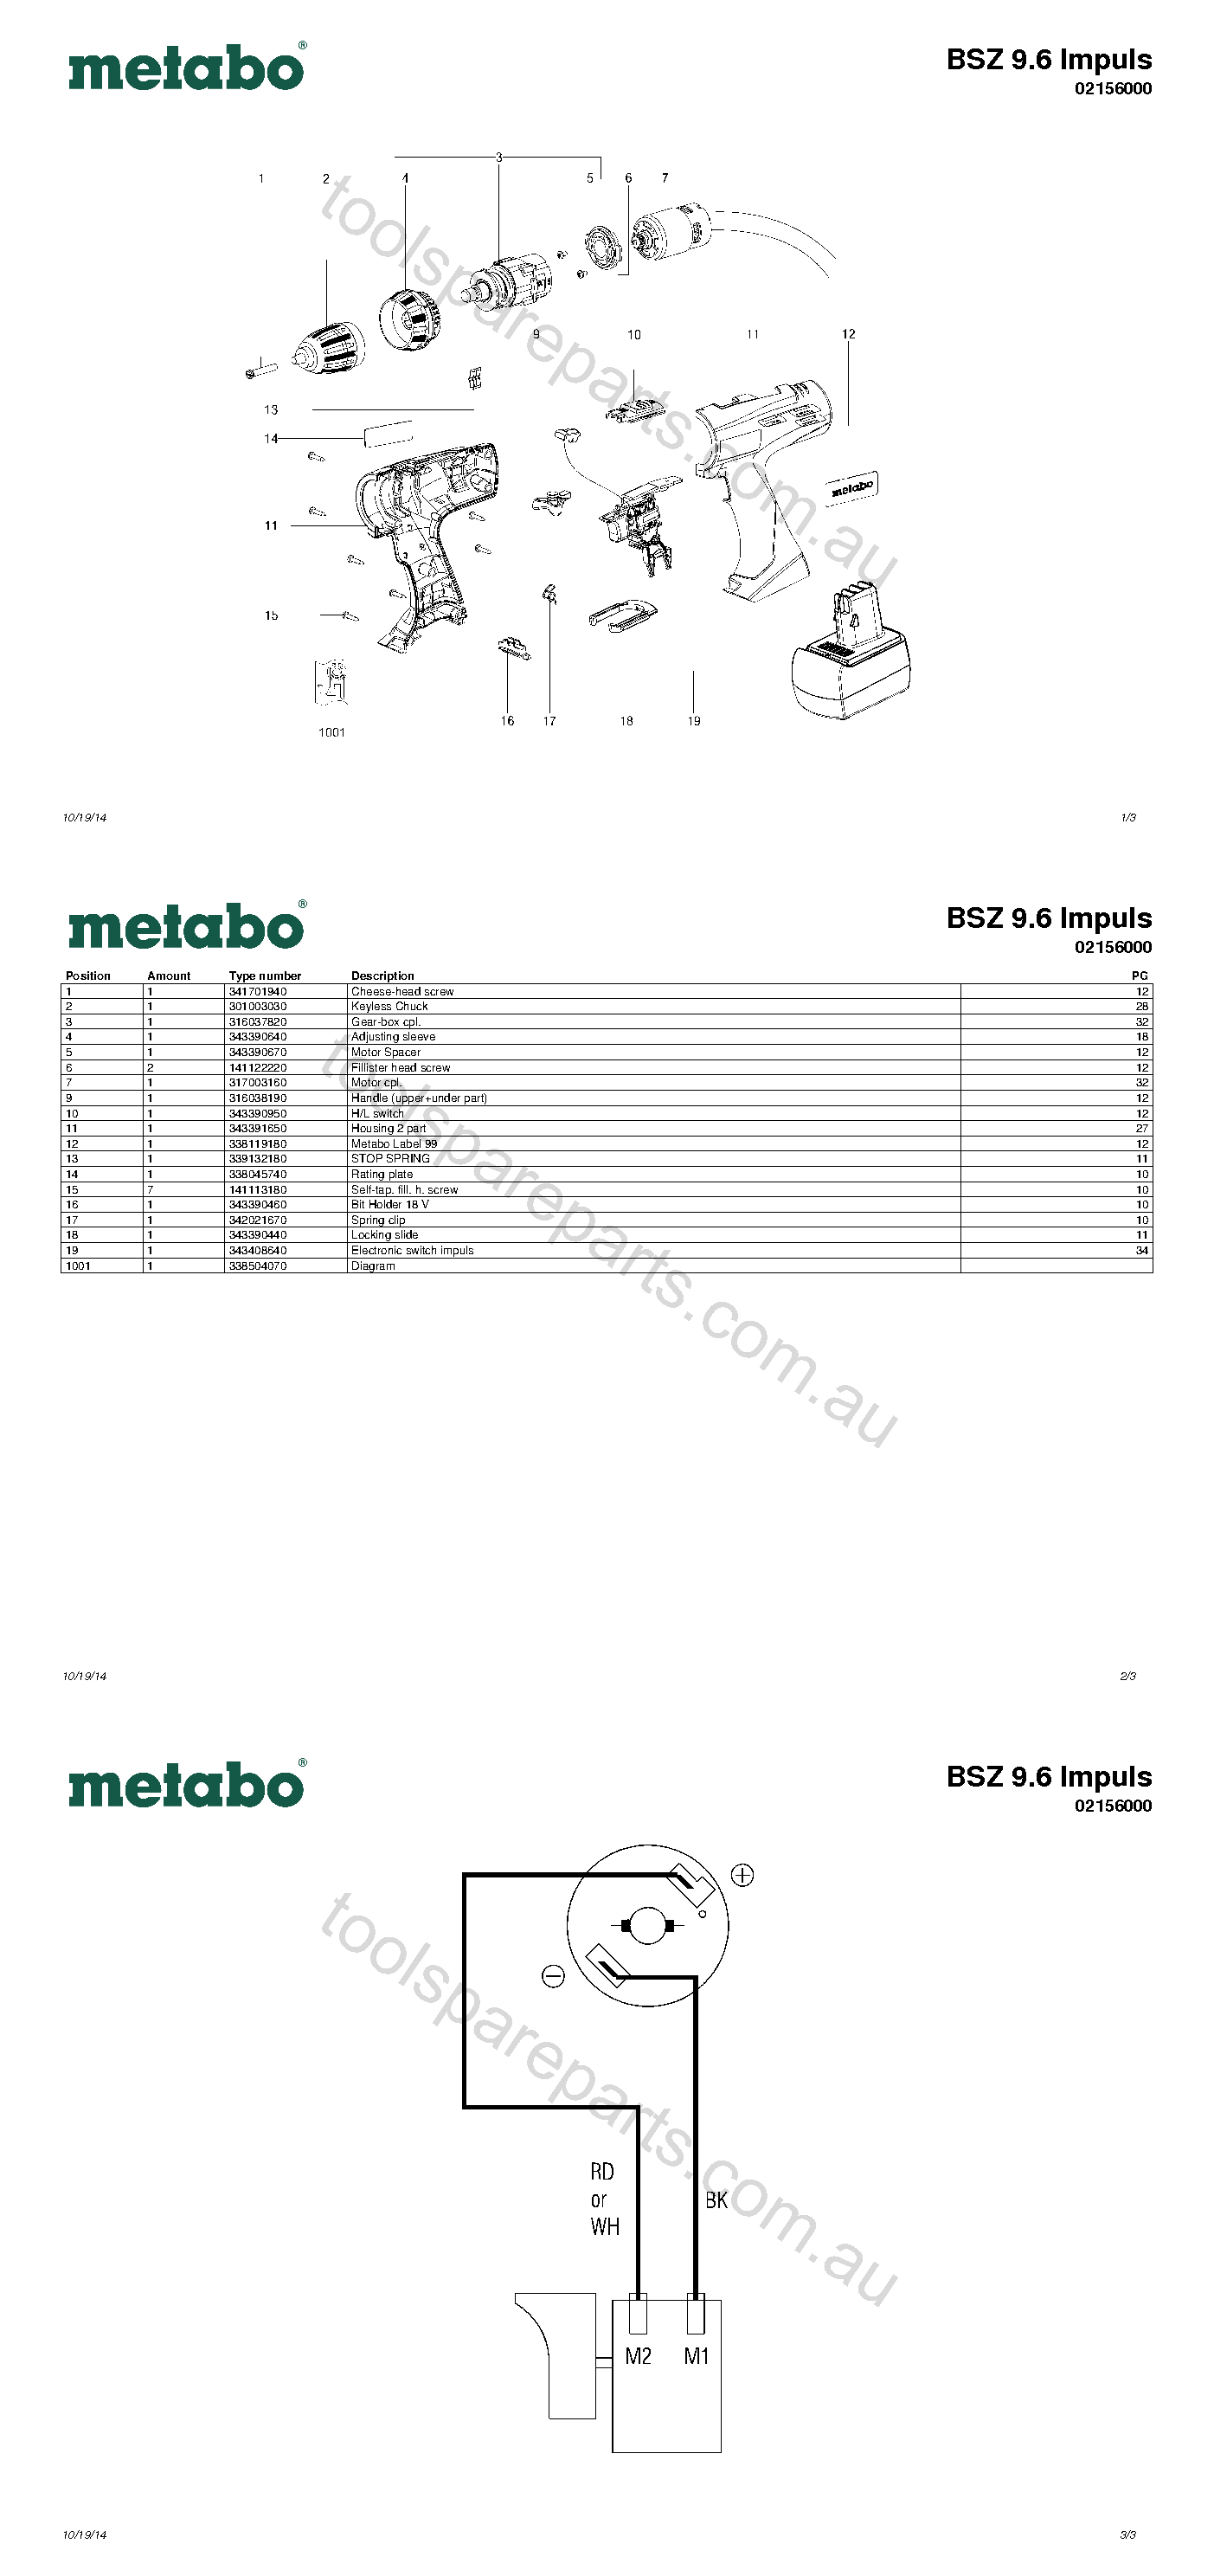 Metabo BSZ 9.6 Impuls 02156000  Diagram 1